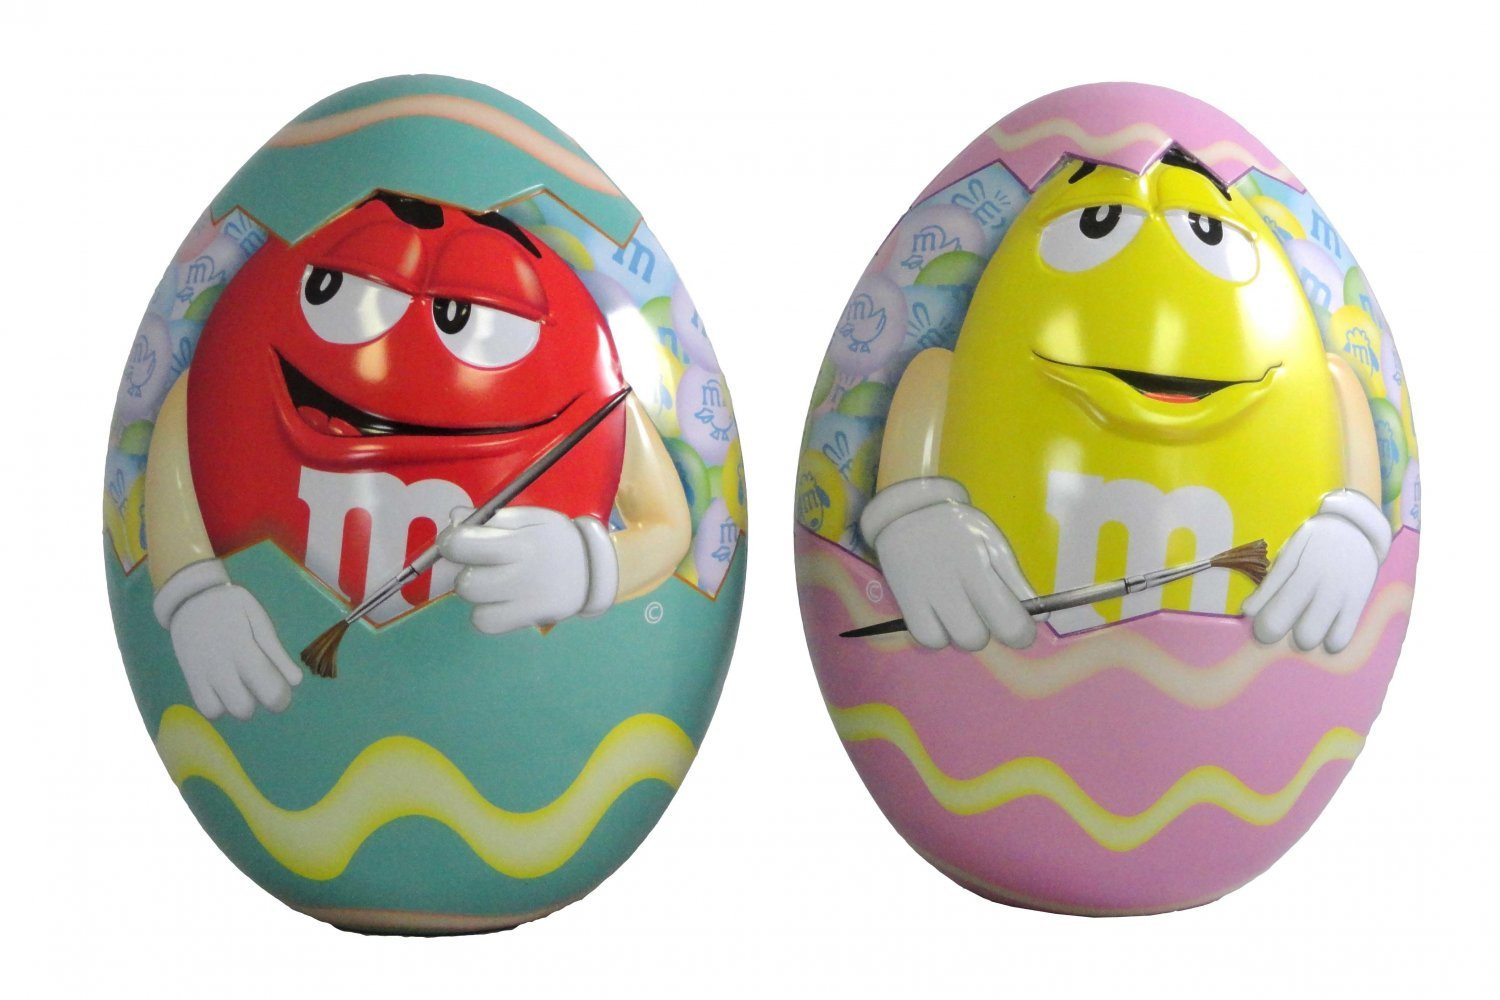 M&M'S® M&M'S® Easter Embossed Egg Tin